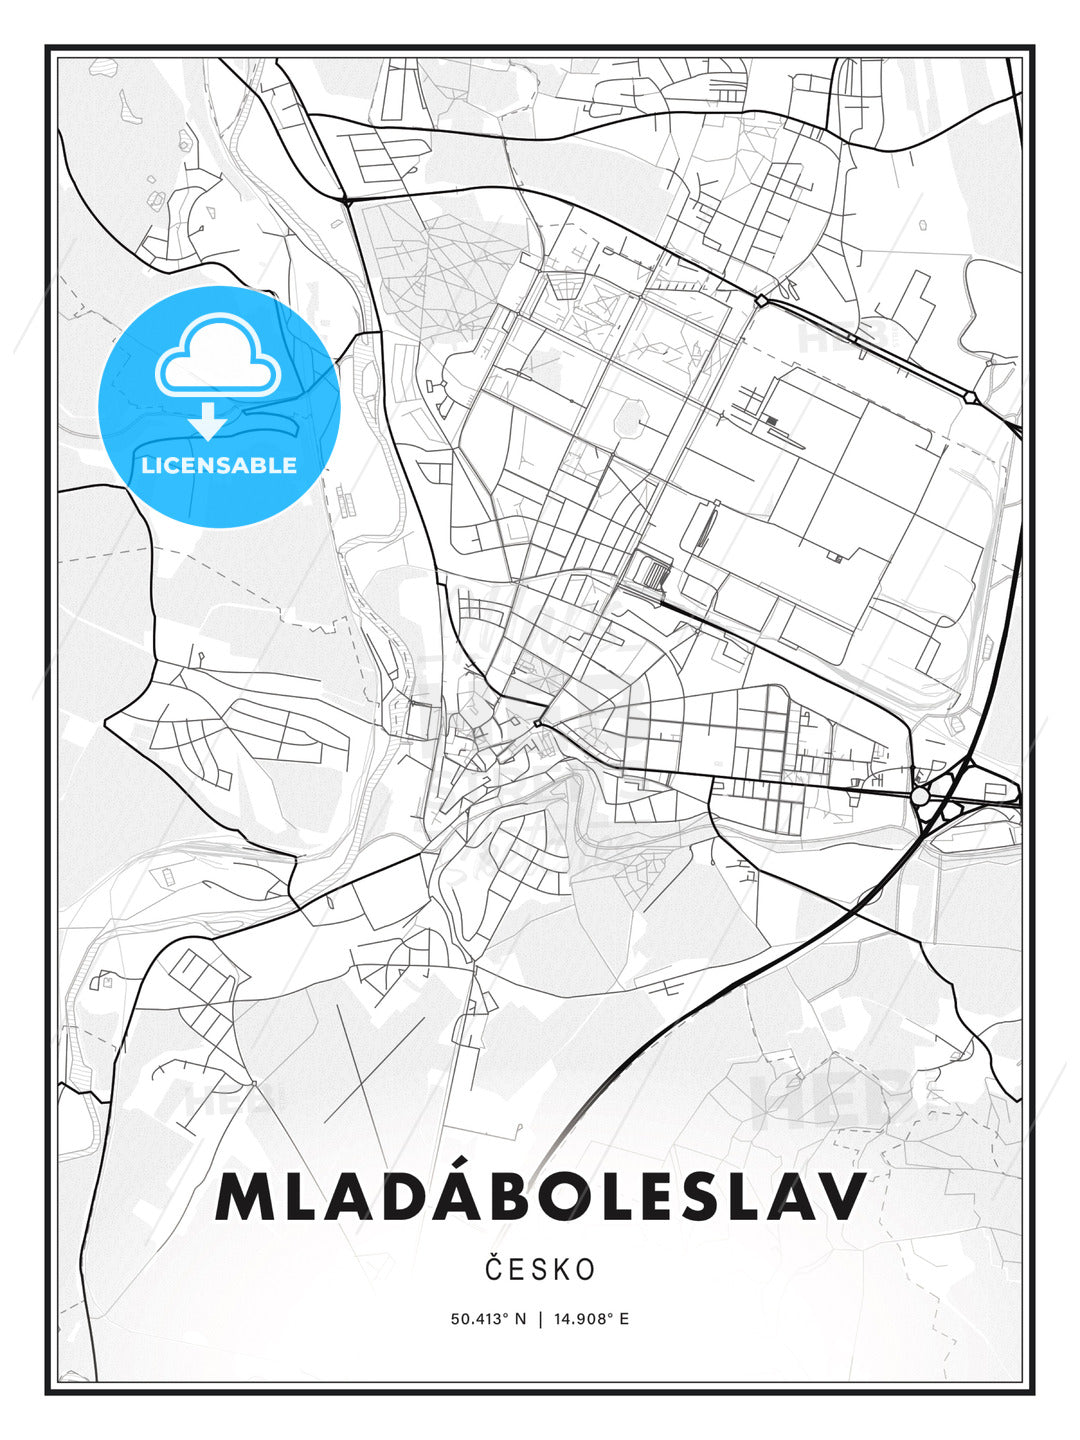 MLADÁBOLESLAV / Mladá Boleslav, Czechia, Modern Print Template in Various Formats - HEBSTREITS Sketches